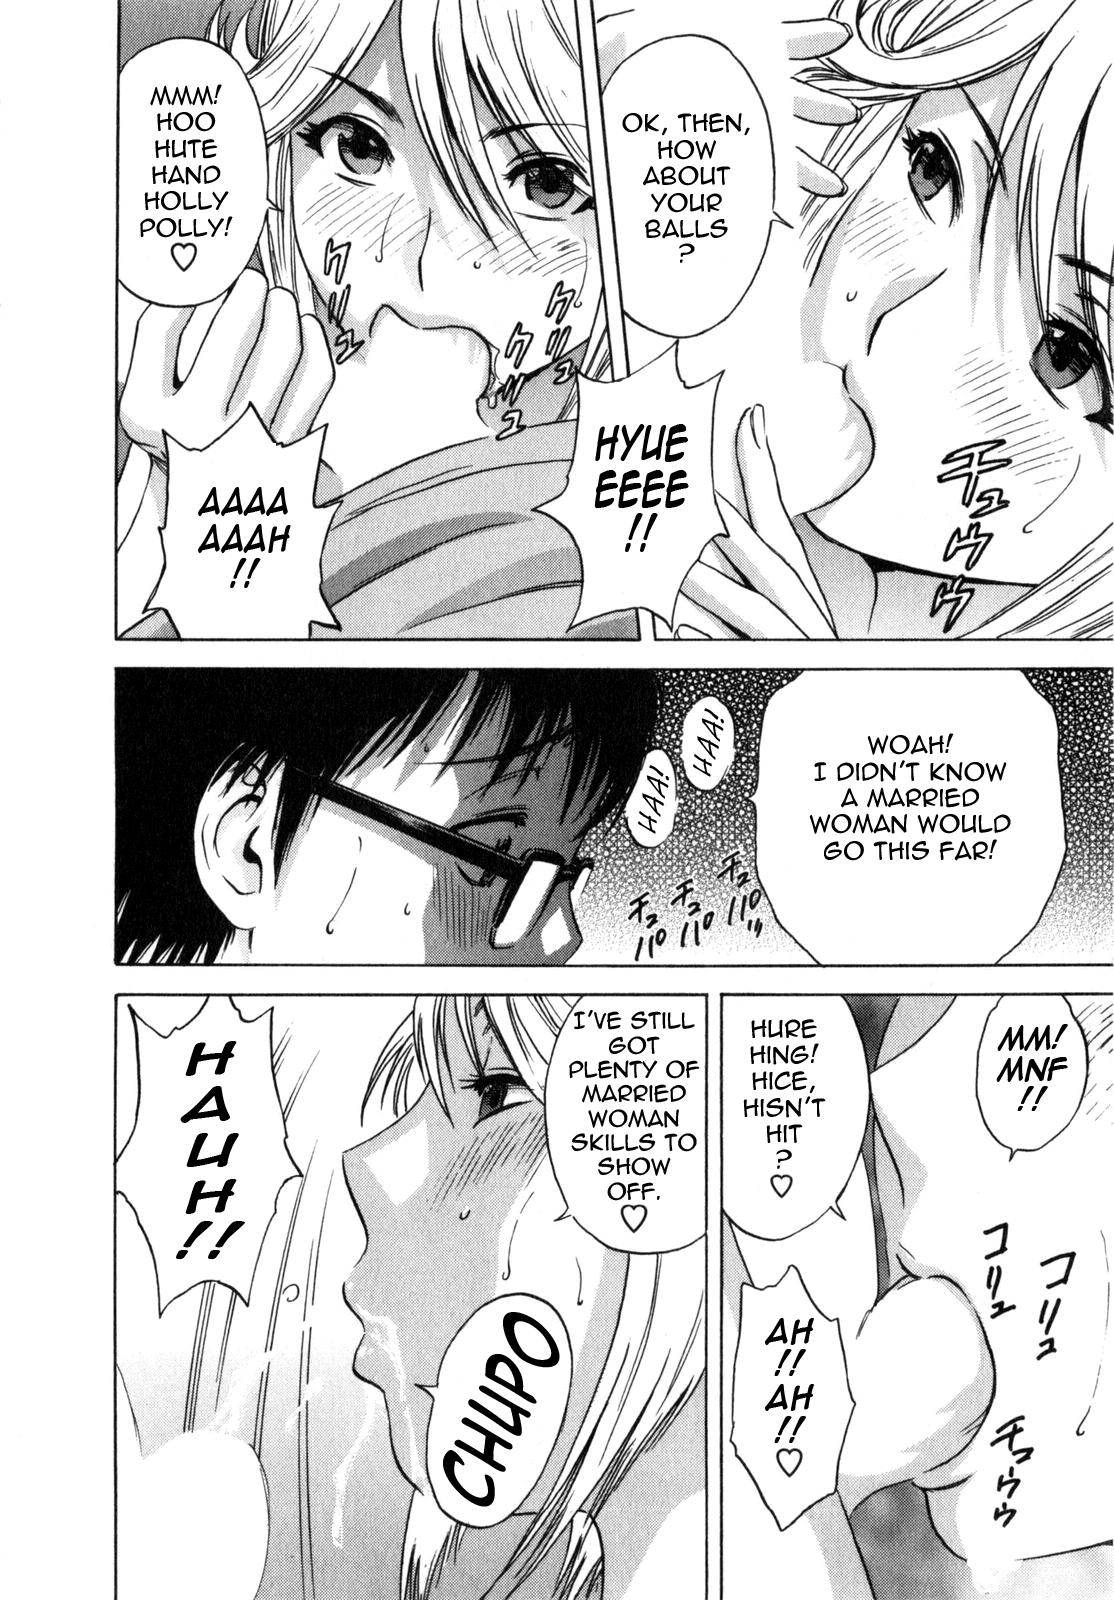 [Hidemaru] Life with Married Women Just Like a Manga 1 - Ch. 1-7 [English] {Tadanohito} 35